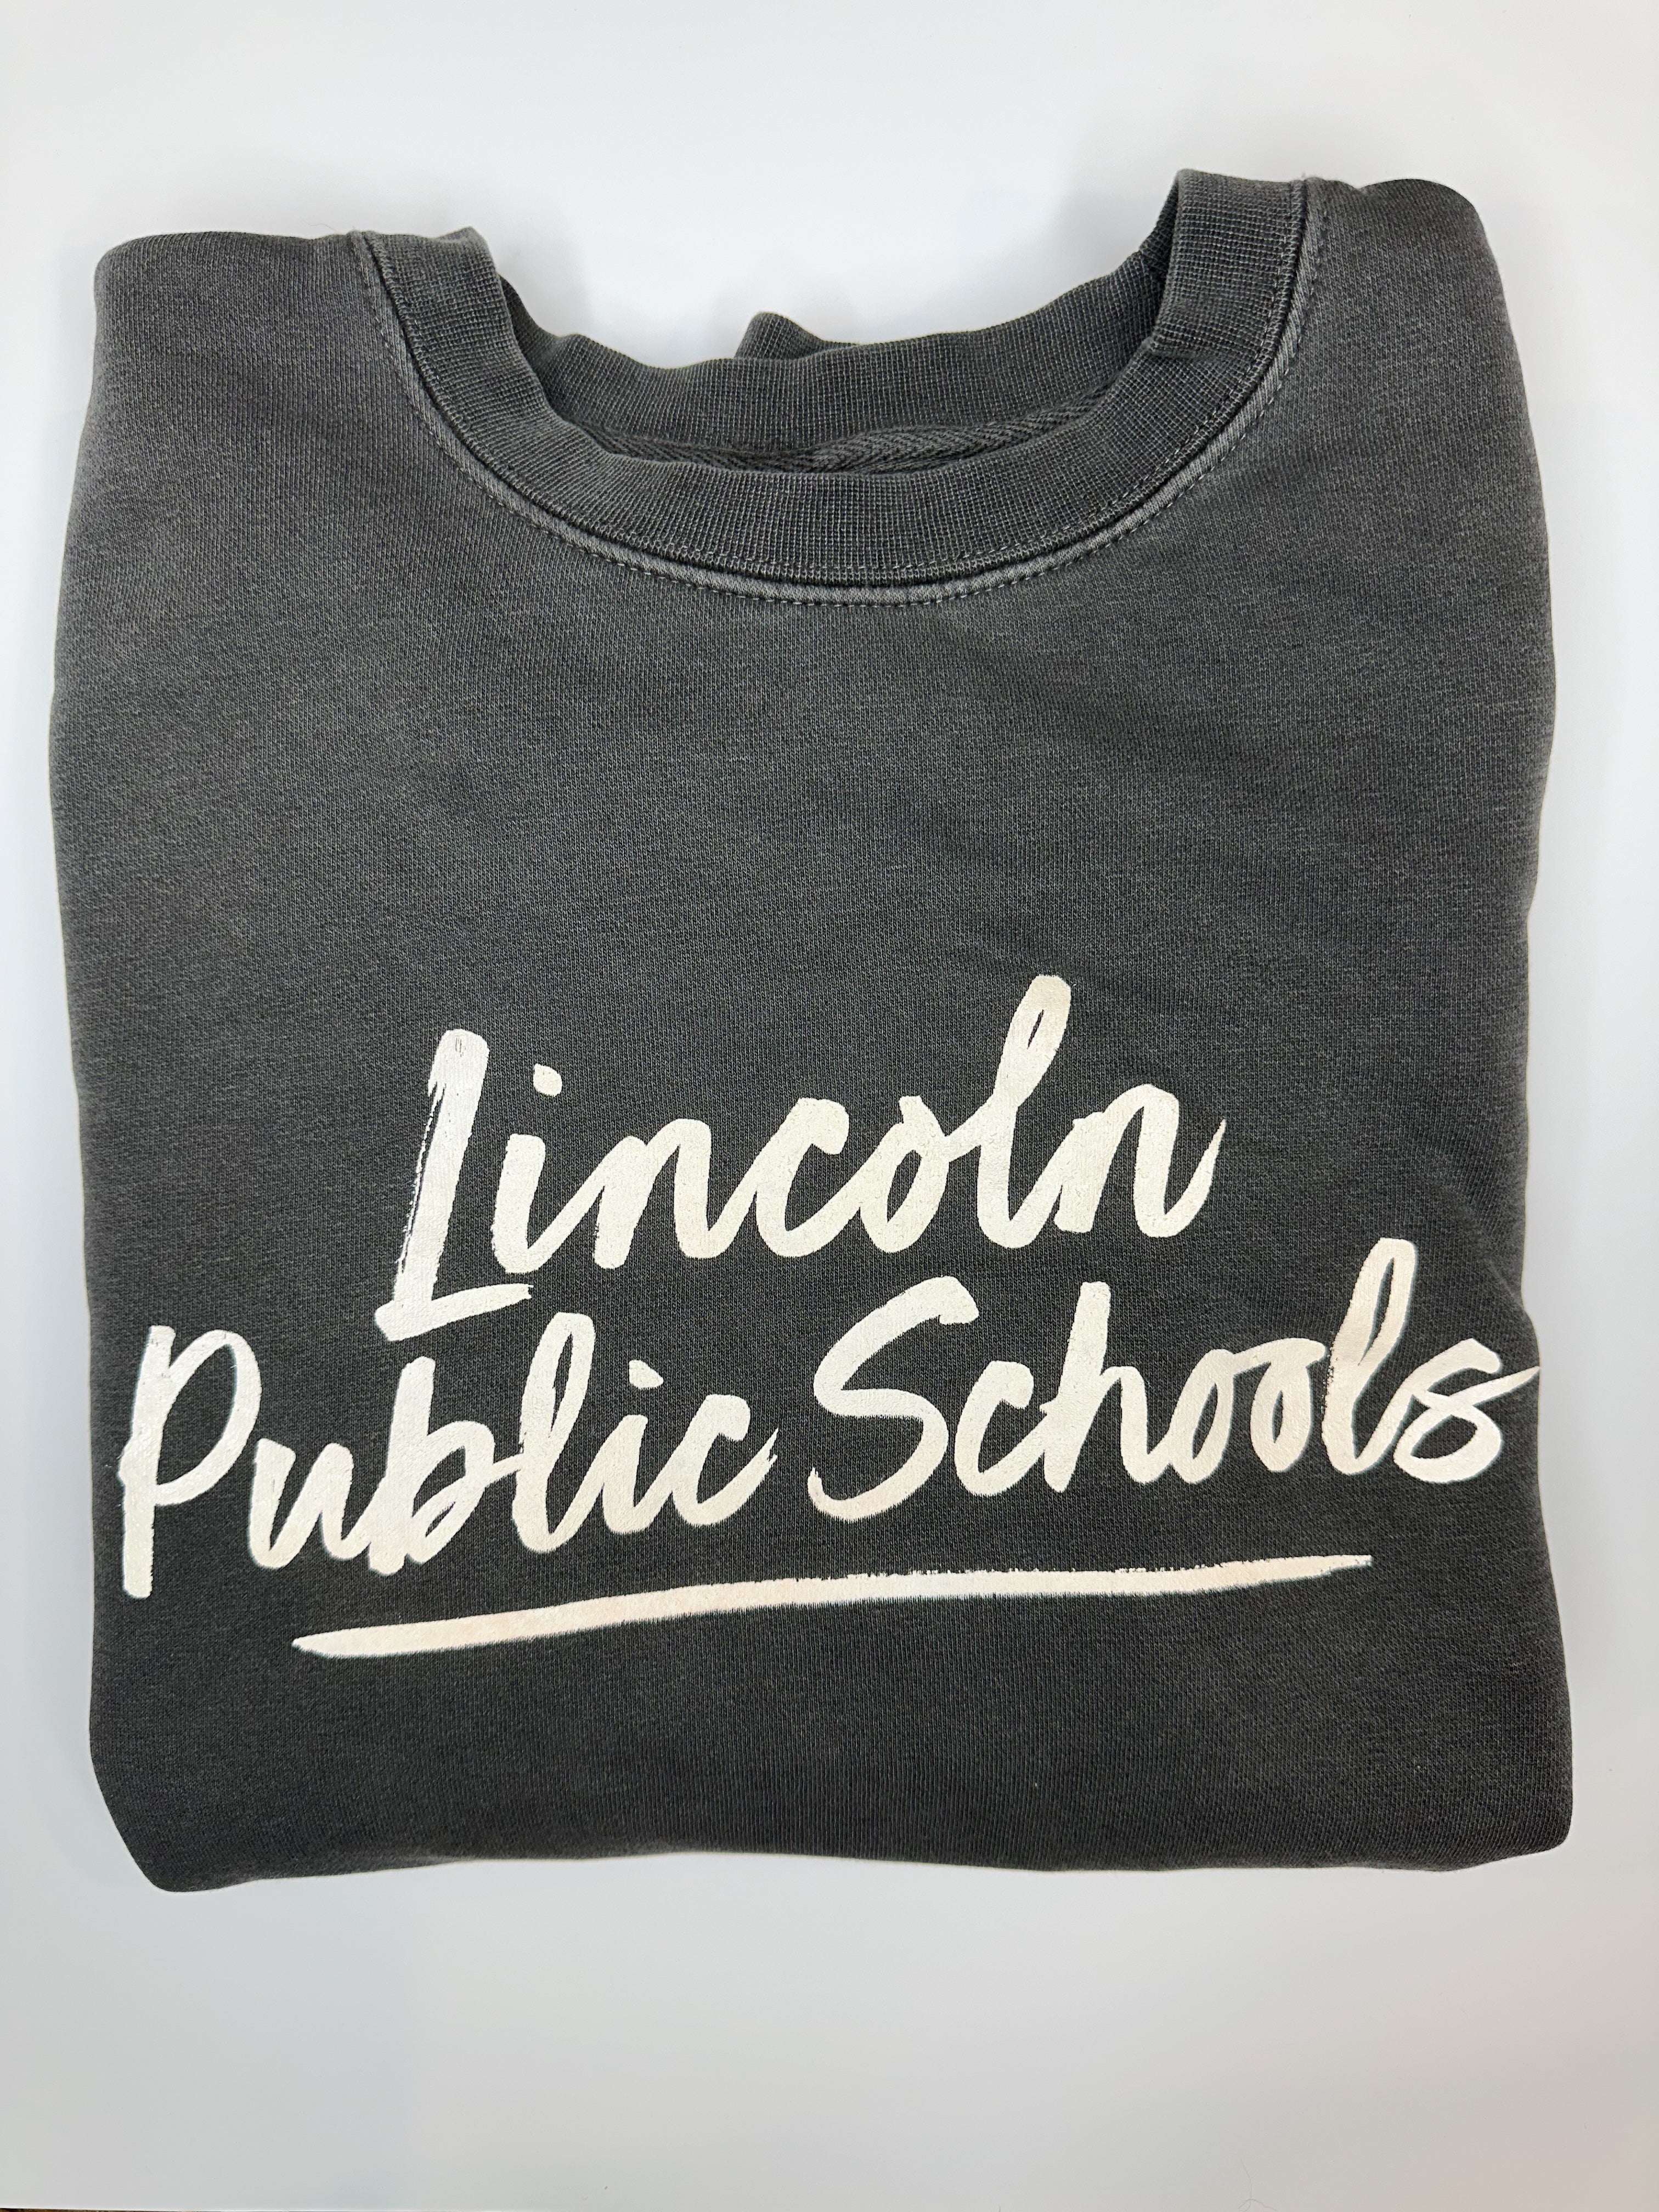 Lincoln Public Schools Crewneck